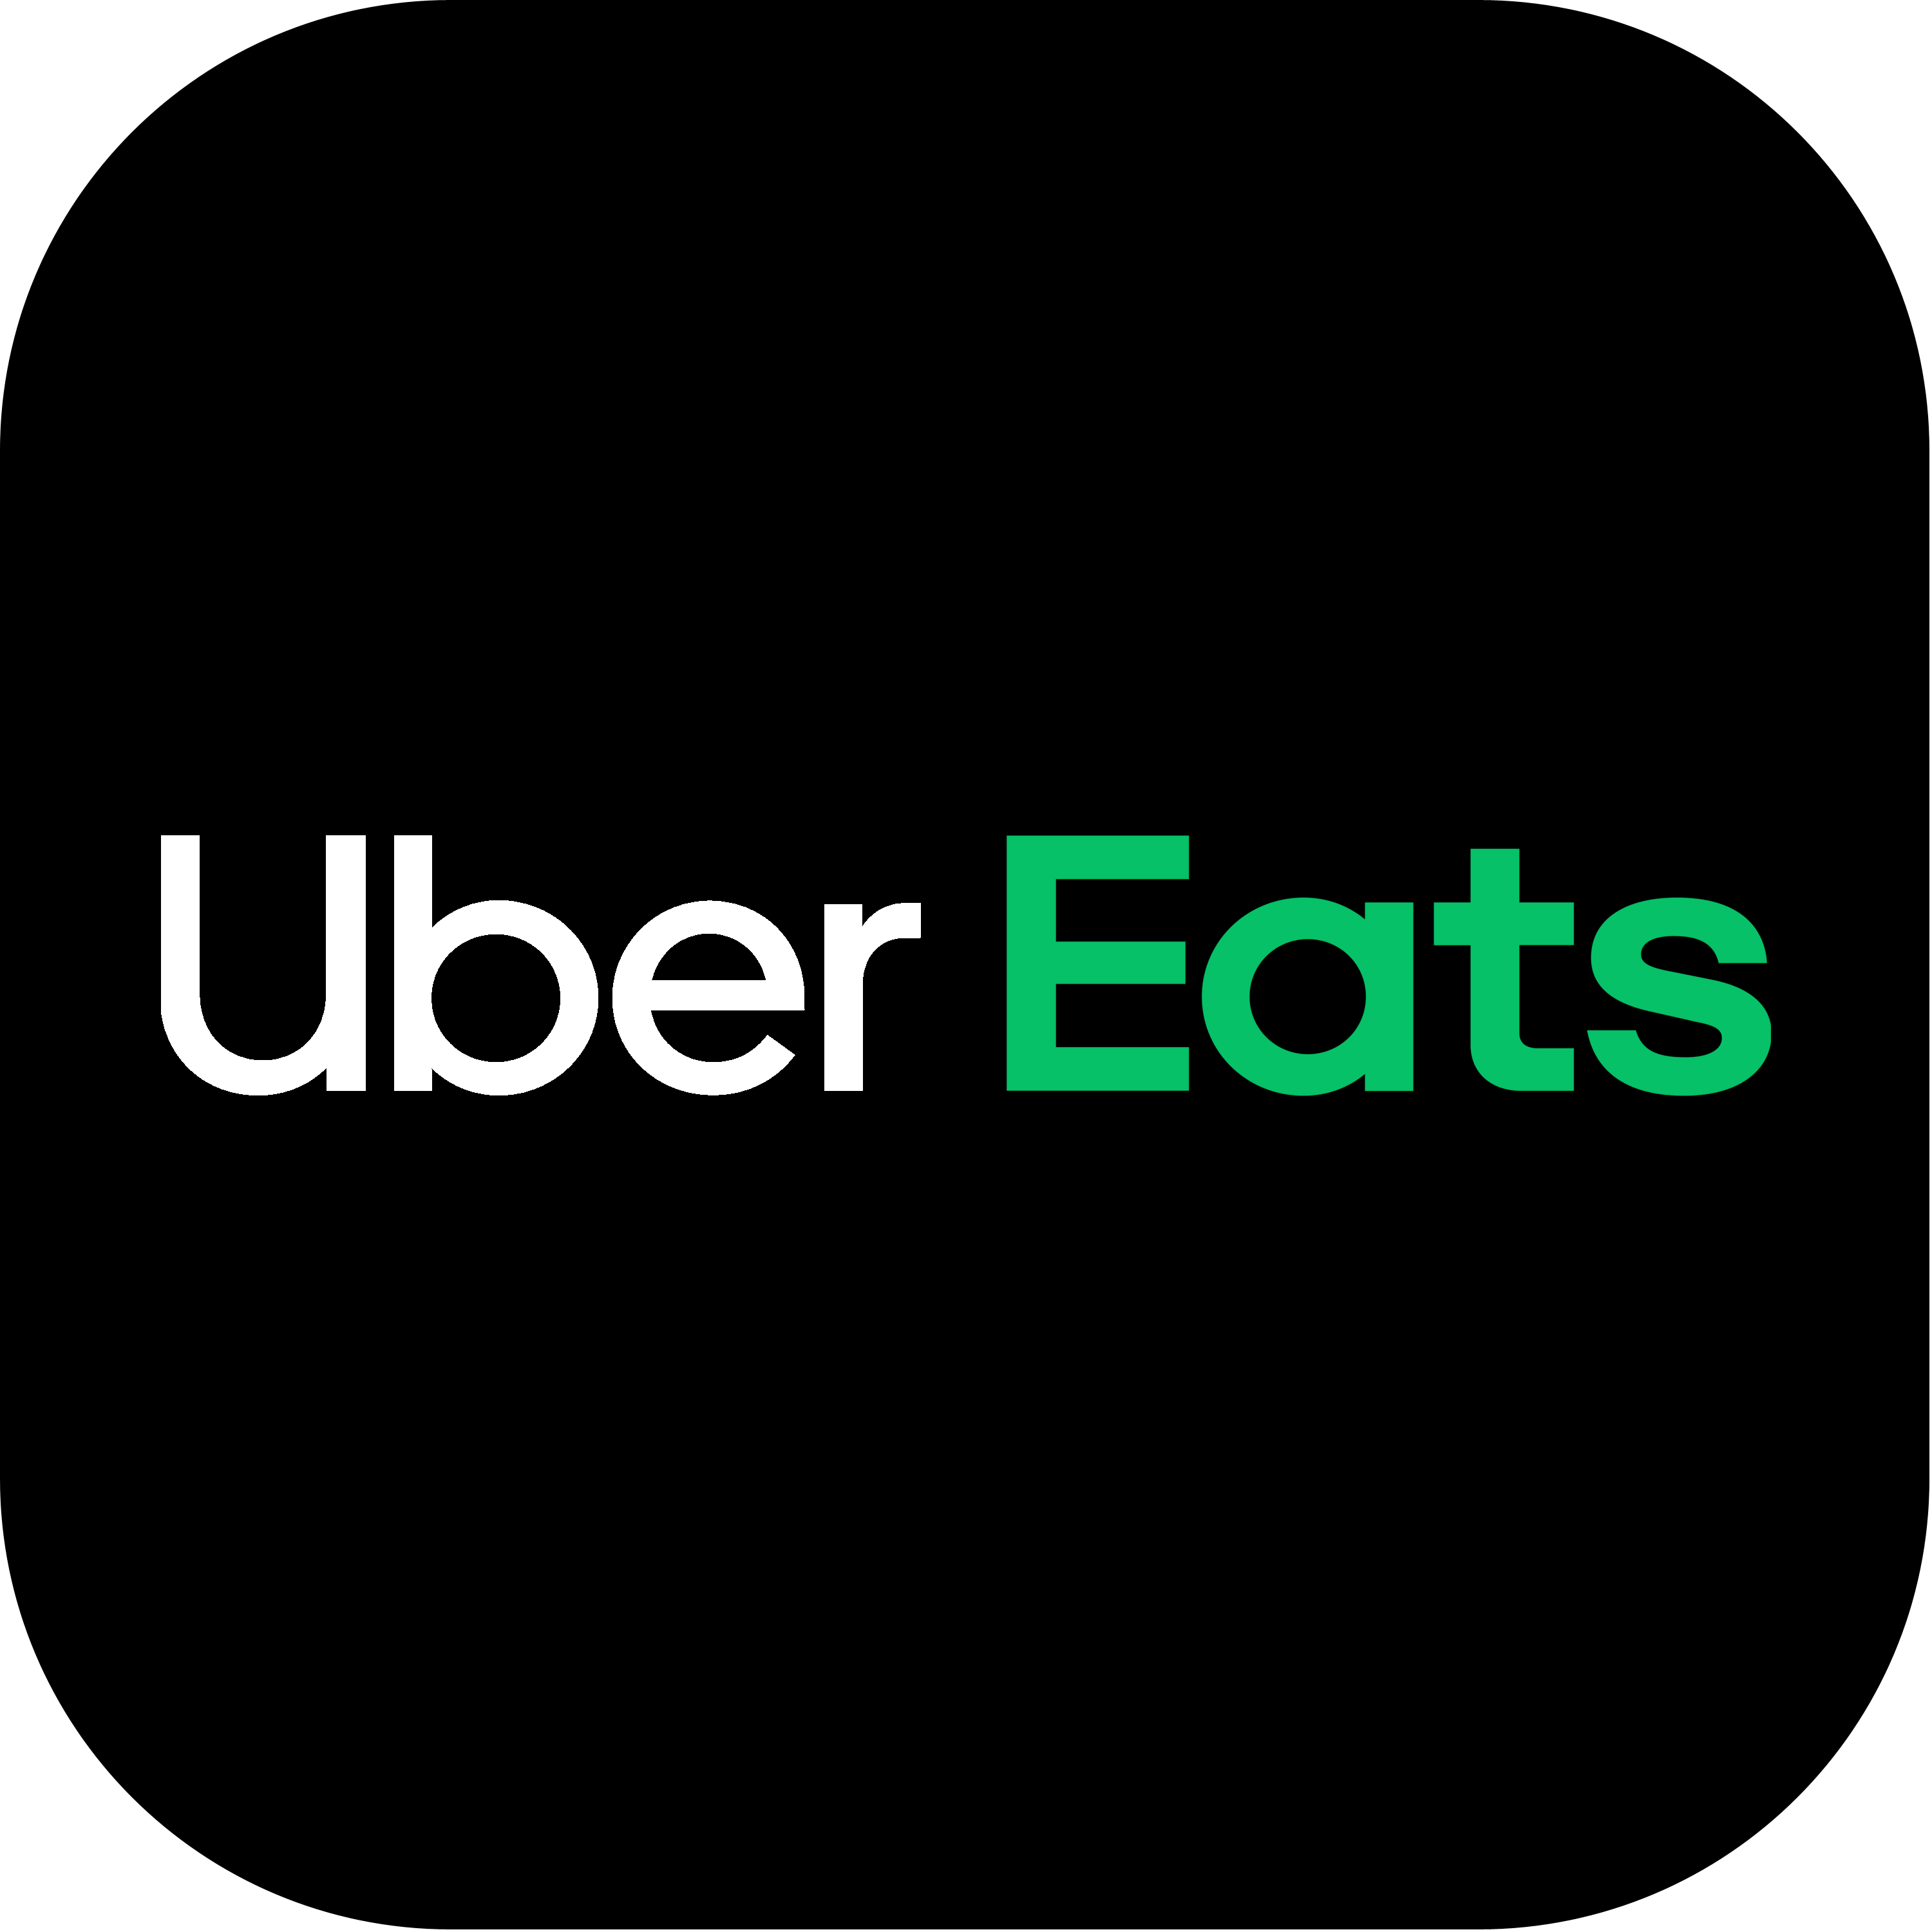 Uber Eats Logo 2020 Transparent Photo